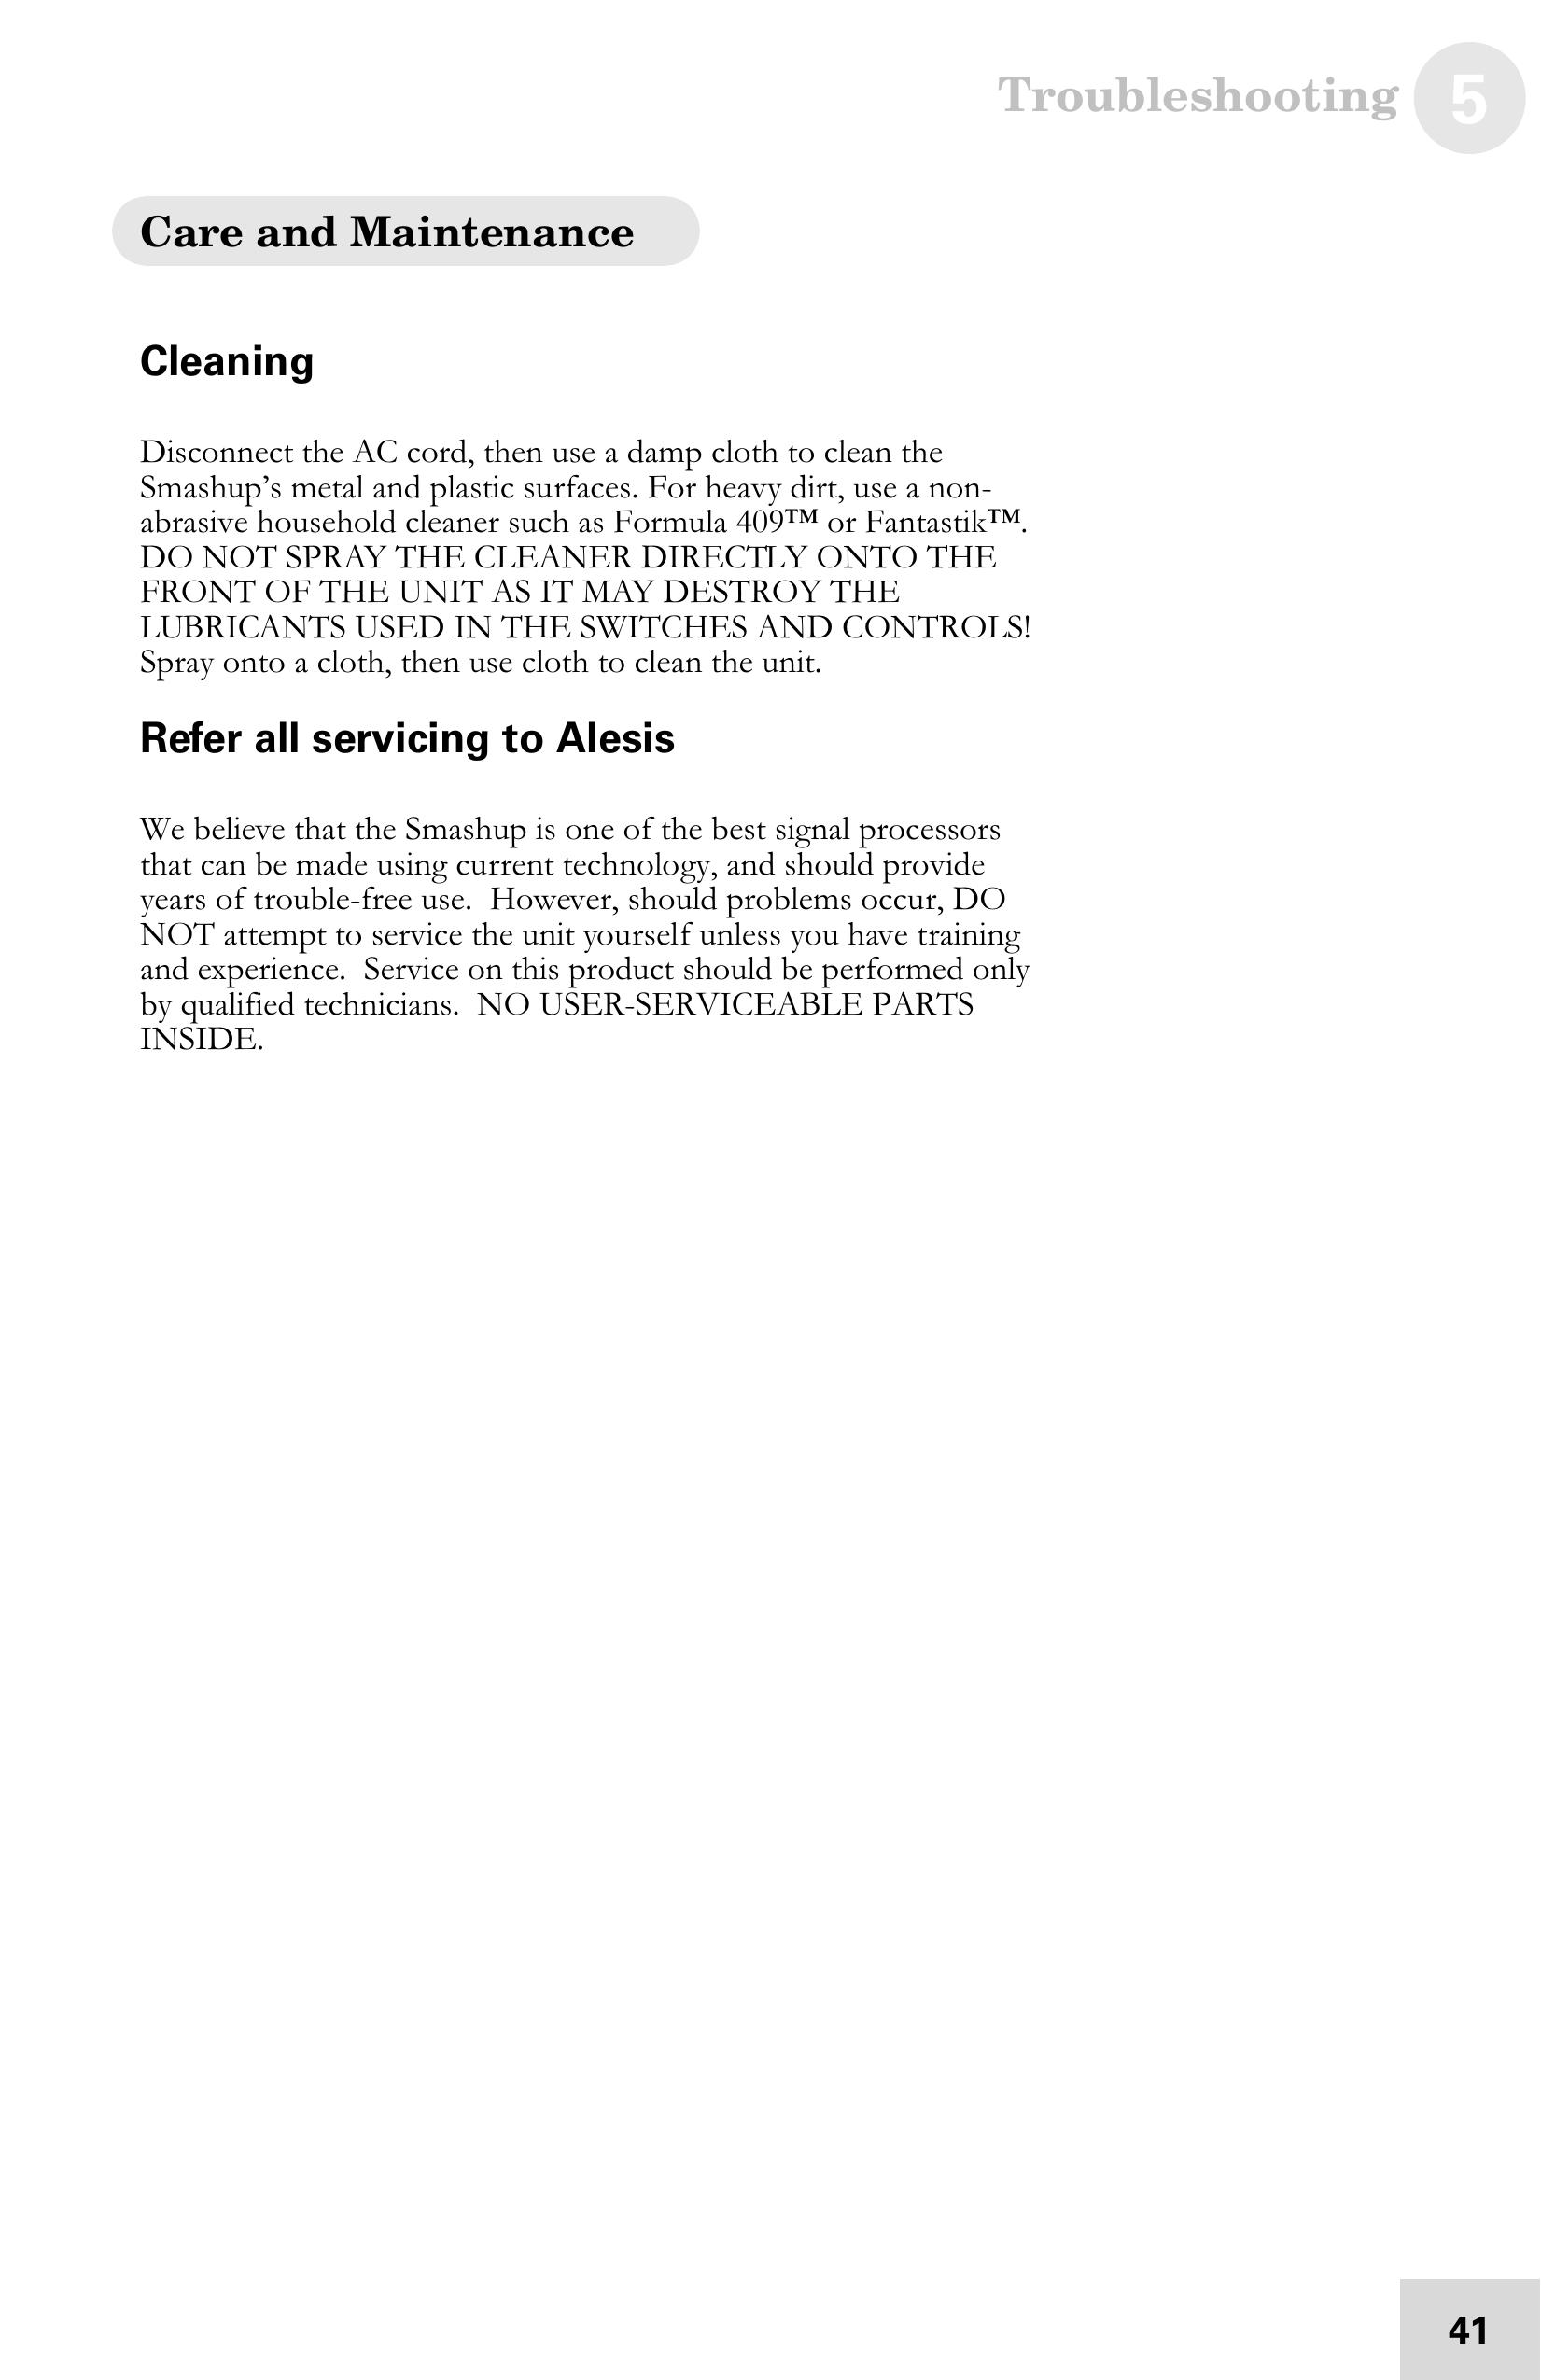 Alesis 7-51-0121-A DJ Equipment User Manual (Page 43)